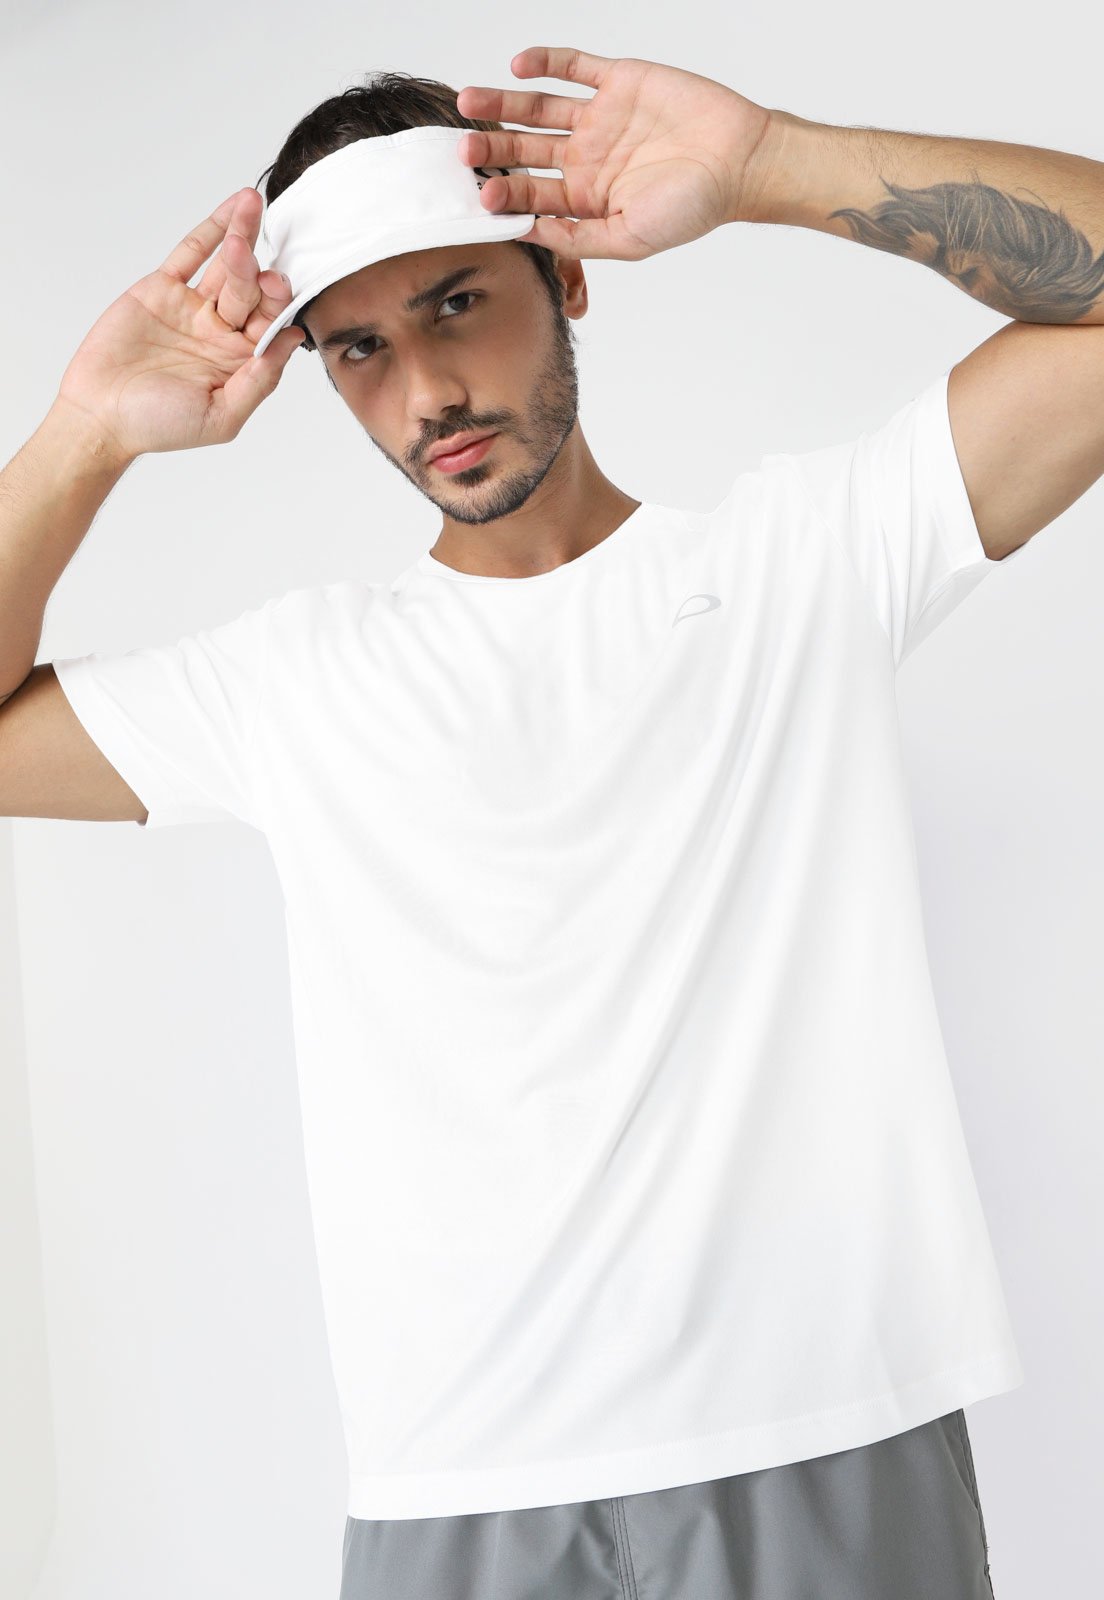 Kit Camiseta Oakley Daily Sport III Masculina C/ 2 Peças - Branco+Preto